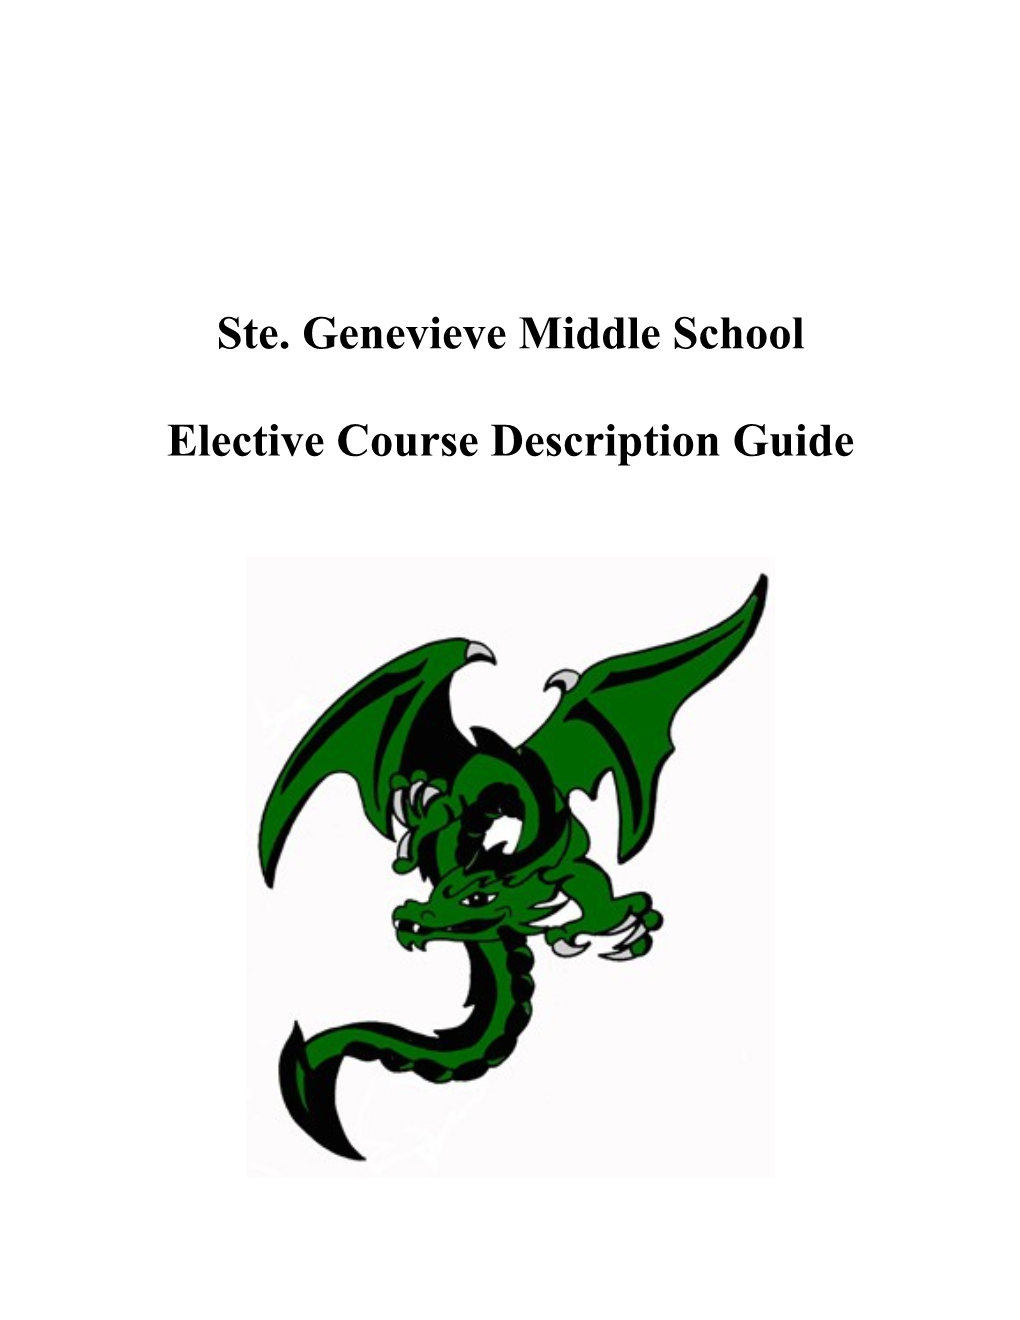 Ste. Genevieve Middle School